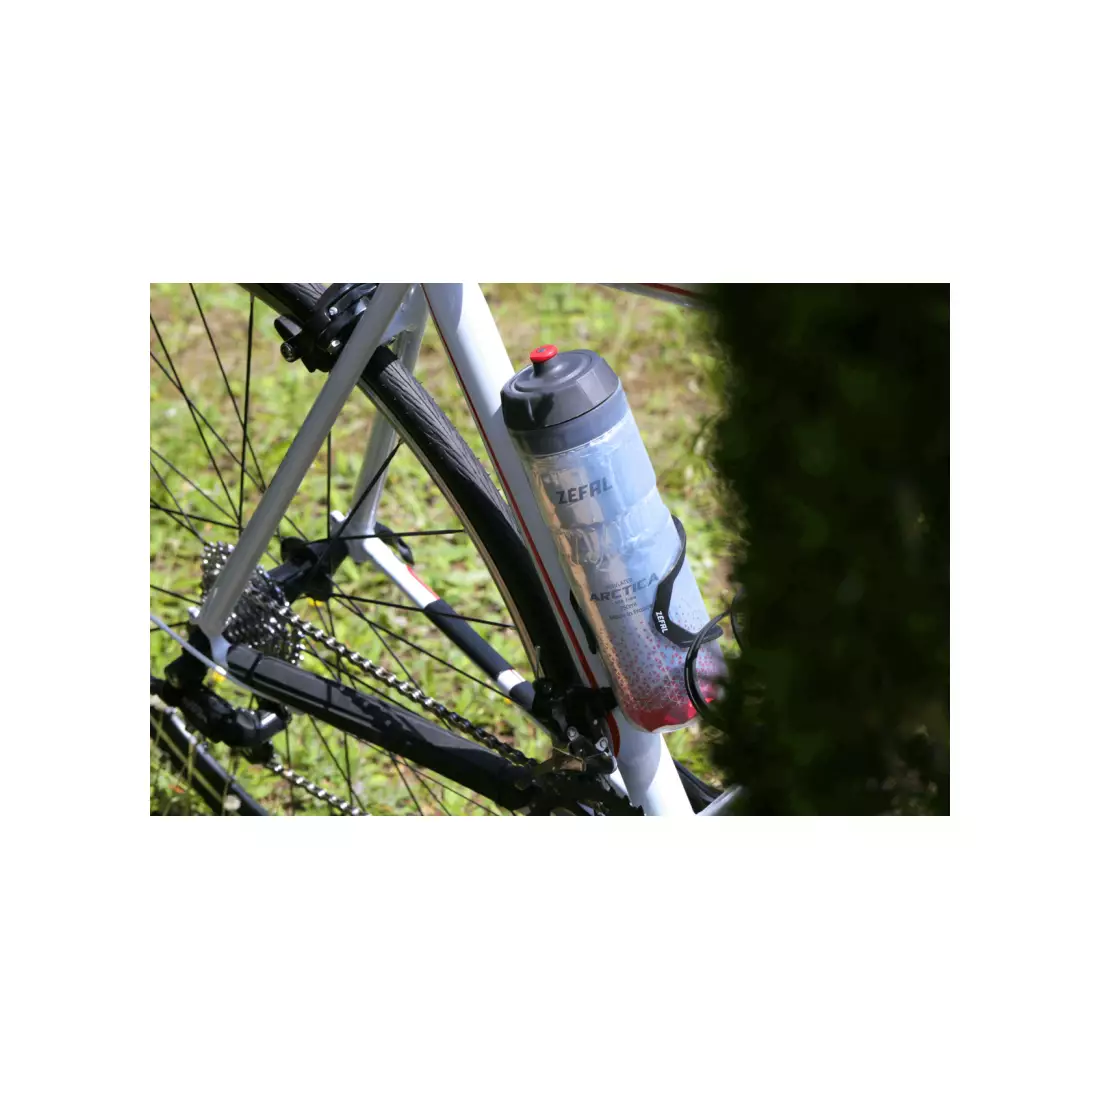 ZEFAL kerékpár termikus palack ARCTICA 75 silver/red 0,75L ZF-1673